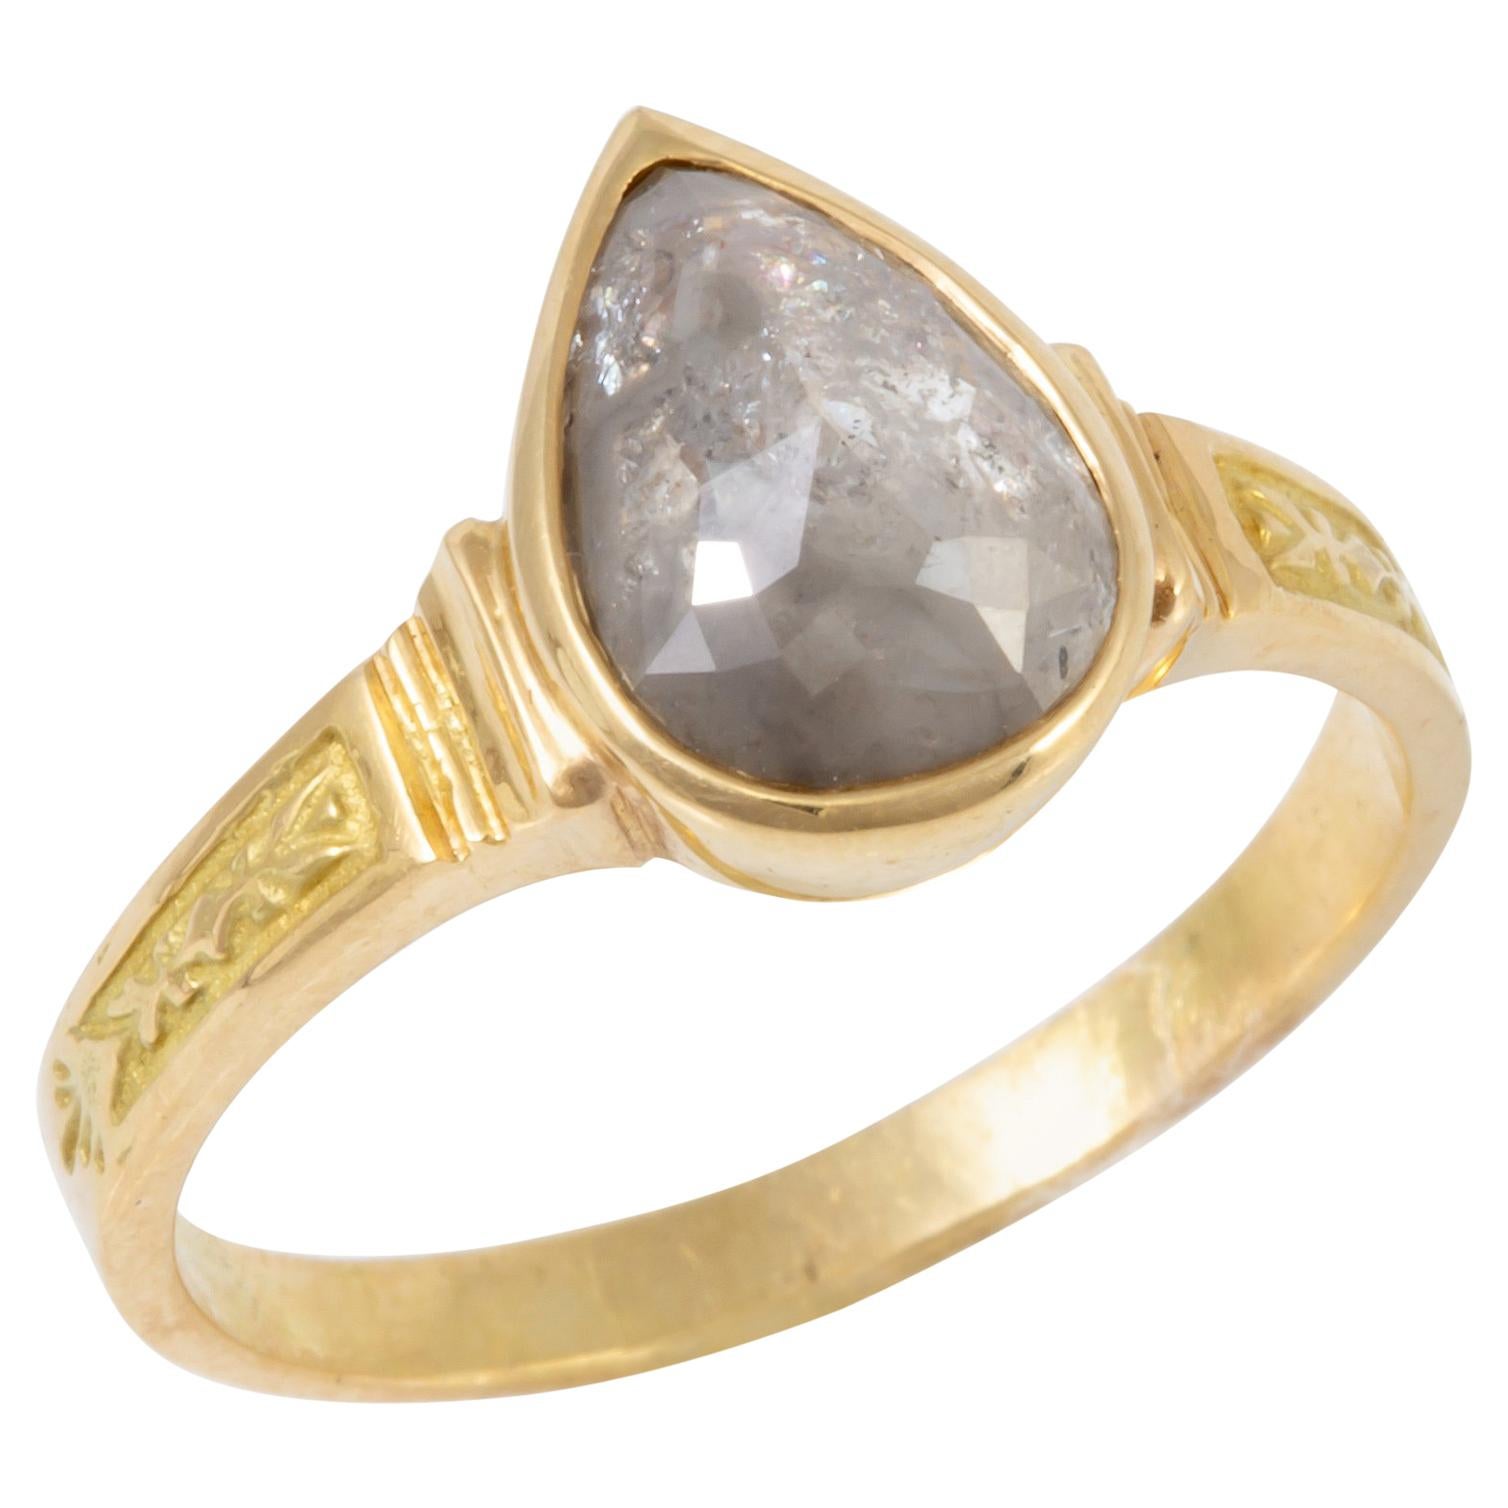 1.70 Carat Pear Shaped Raw Diamond in 18 Karat Gold Ring For Sale